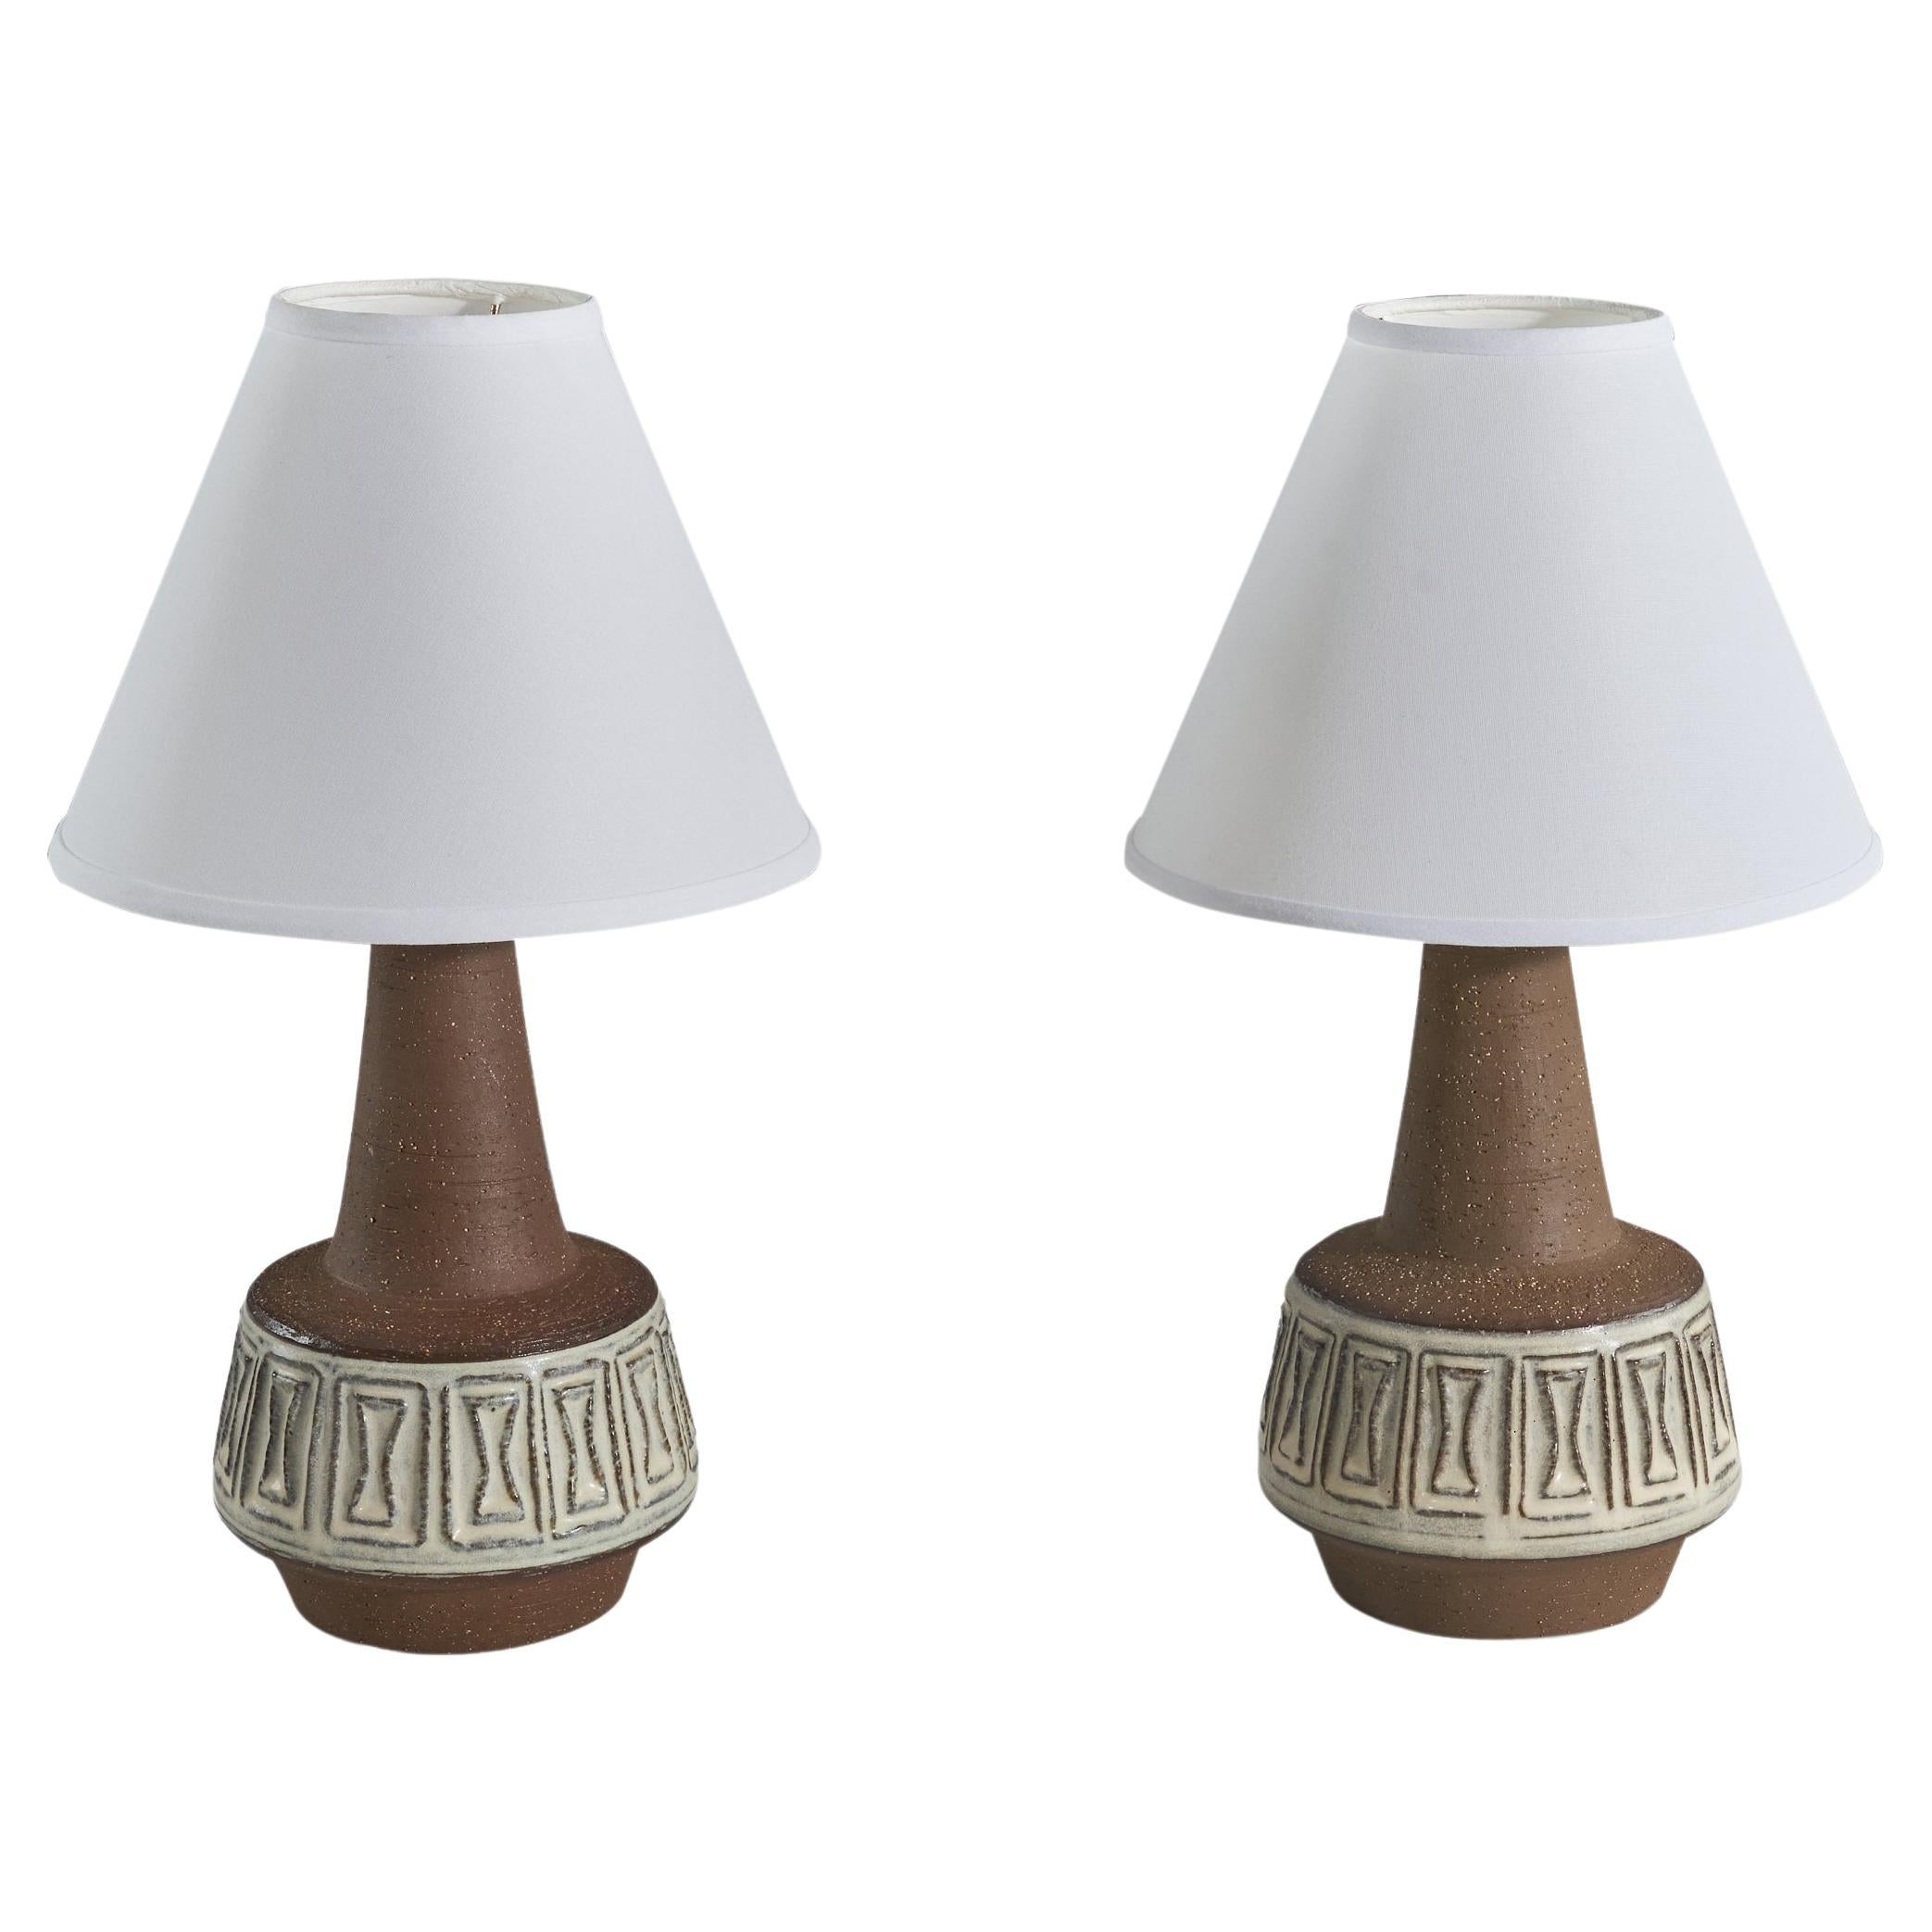 Michael Andersen, Table Lamps, Brown-Glazed Stoneware, Denmark, 1960s For Sale